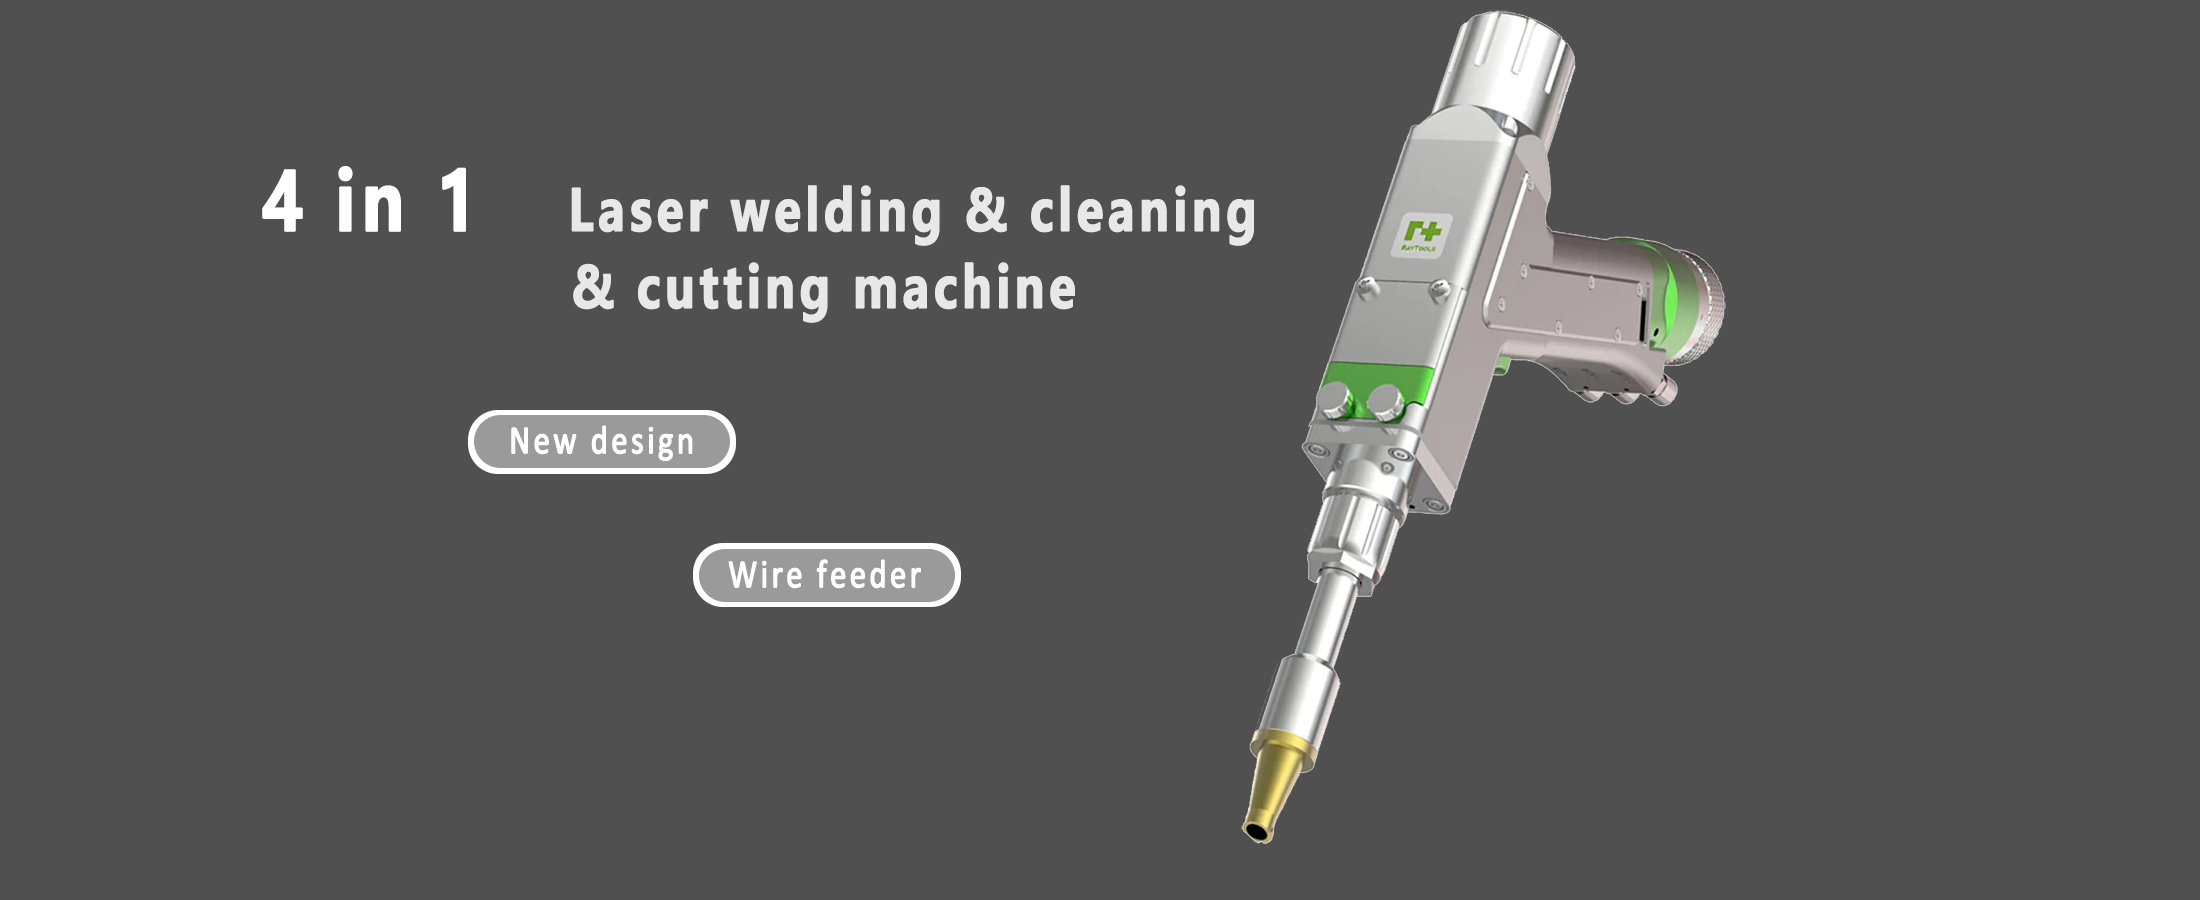 4-in-1 laser welding  cleaning cutting machine